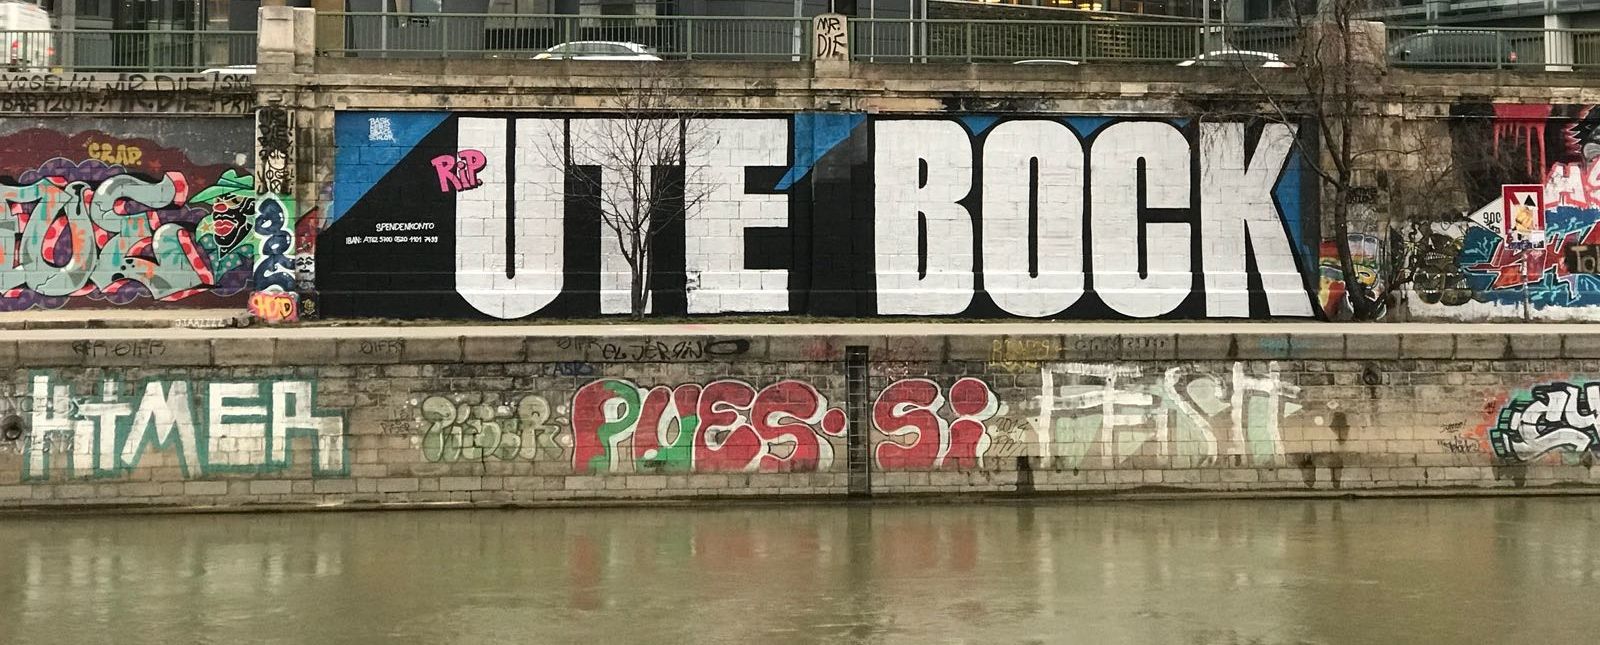 Graffiti am Wiener Donaukanal in Erinnerung an Ute Bock